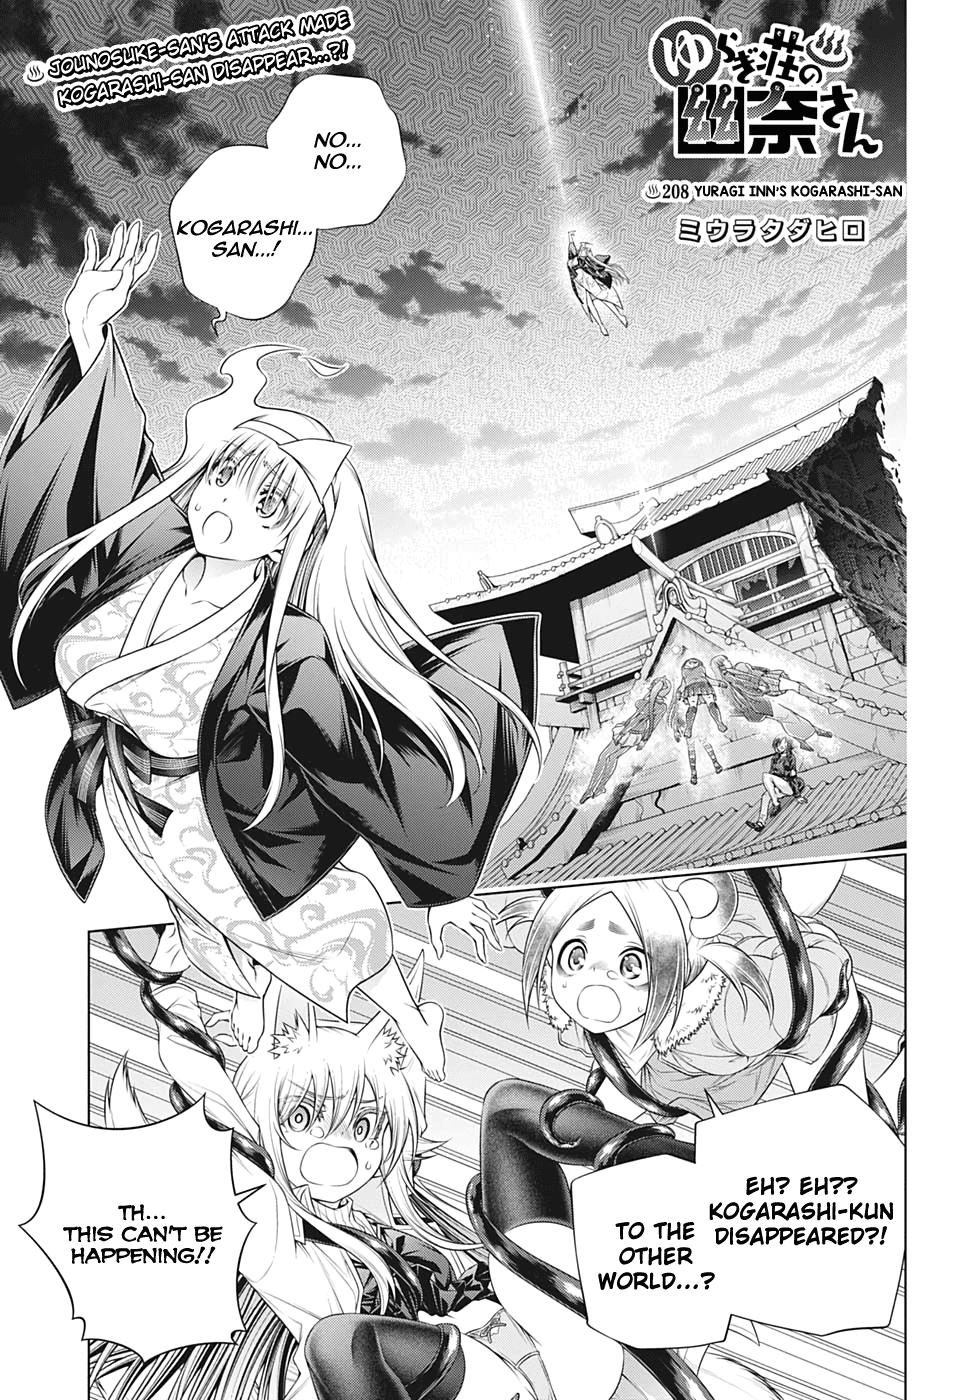 Read Yuragi-Sou No Yuuna-San Vol.24 Chapter 208: Yuragi Inn's Kogarashi-San  on Mangakakalot